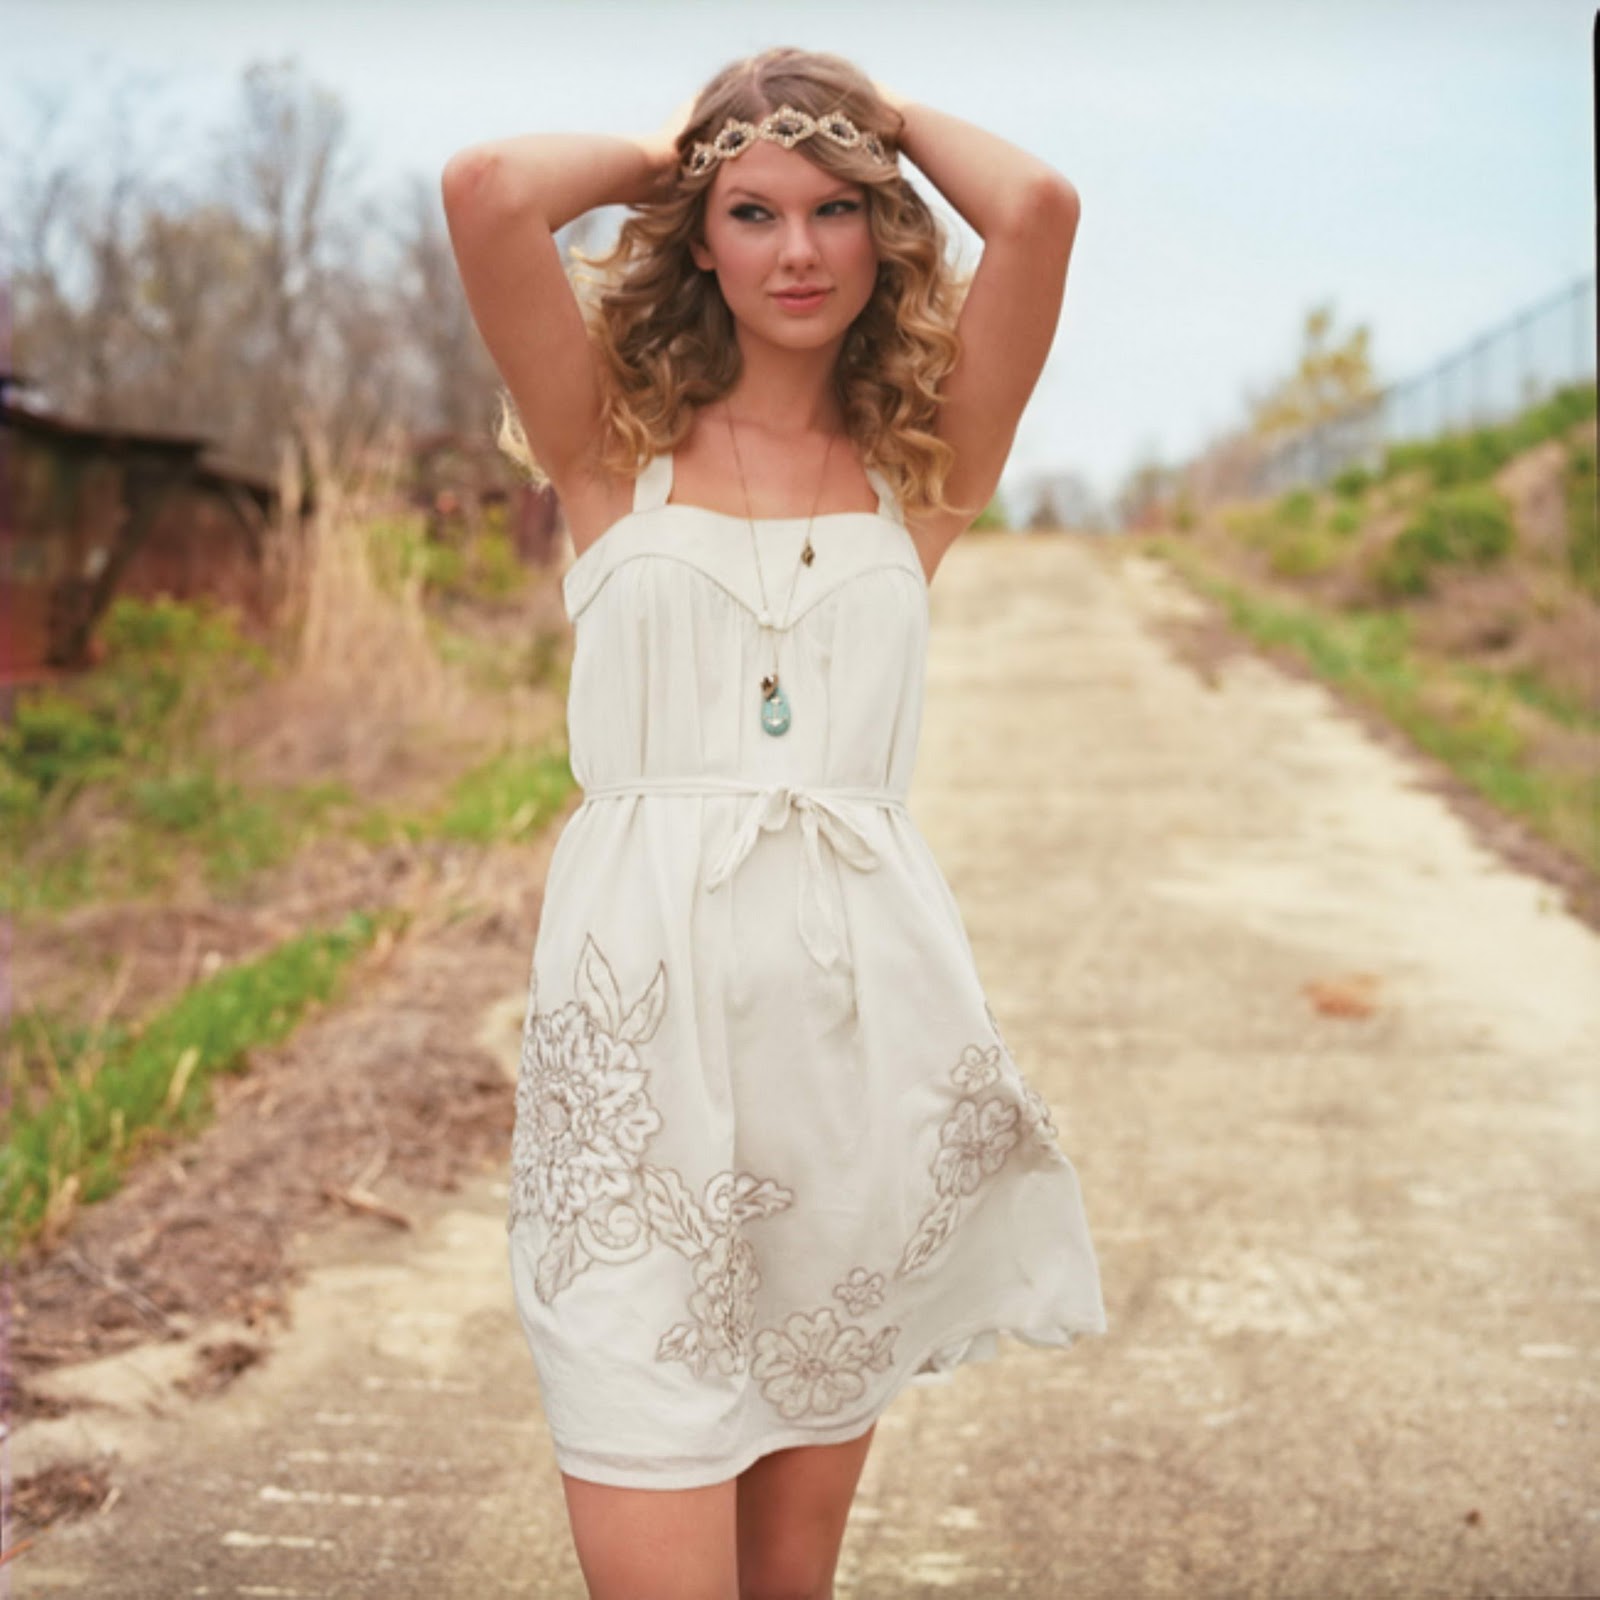 http://2.bp.blogspot.com/_cyH_7sPxVcQ/TKW54QogsnI/AAAAAAAAGMA/DrPGCeyEZYE/s1600/Taylor+Swift+in+beautiful+photoshoot+wearing+white+floral+dress+%284%29.jpg